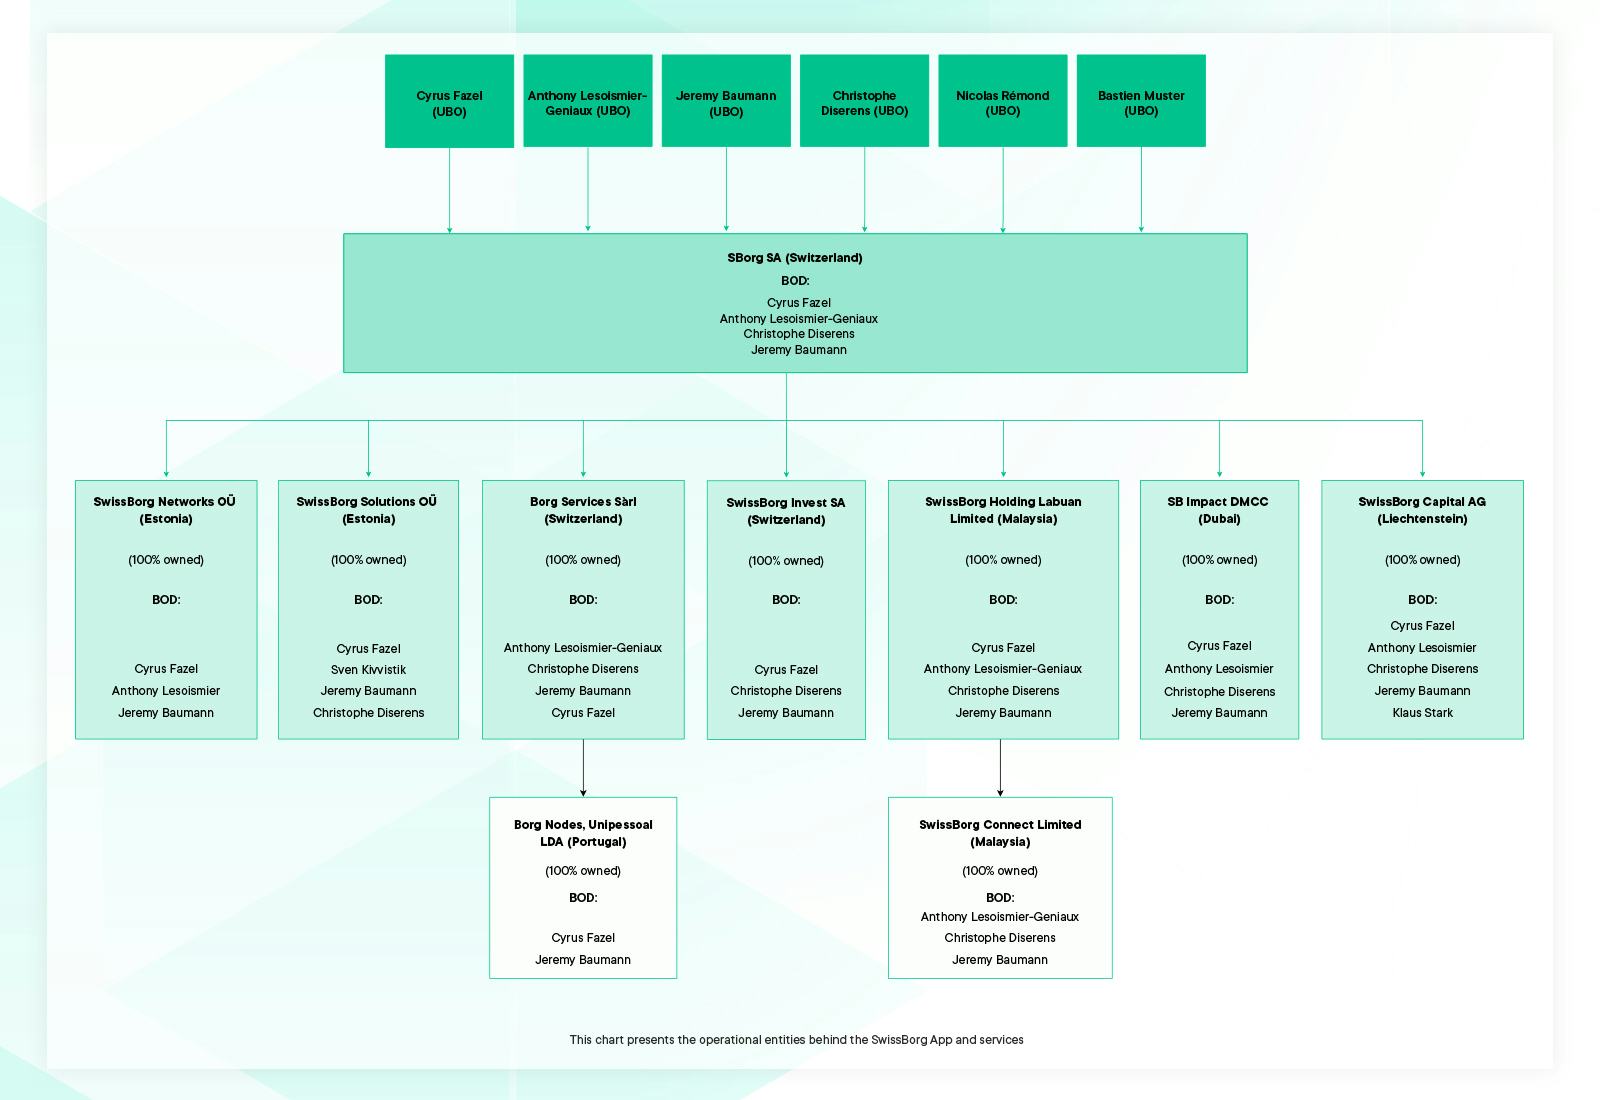 wissBorg’s Operational Entities Organisational Chart